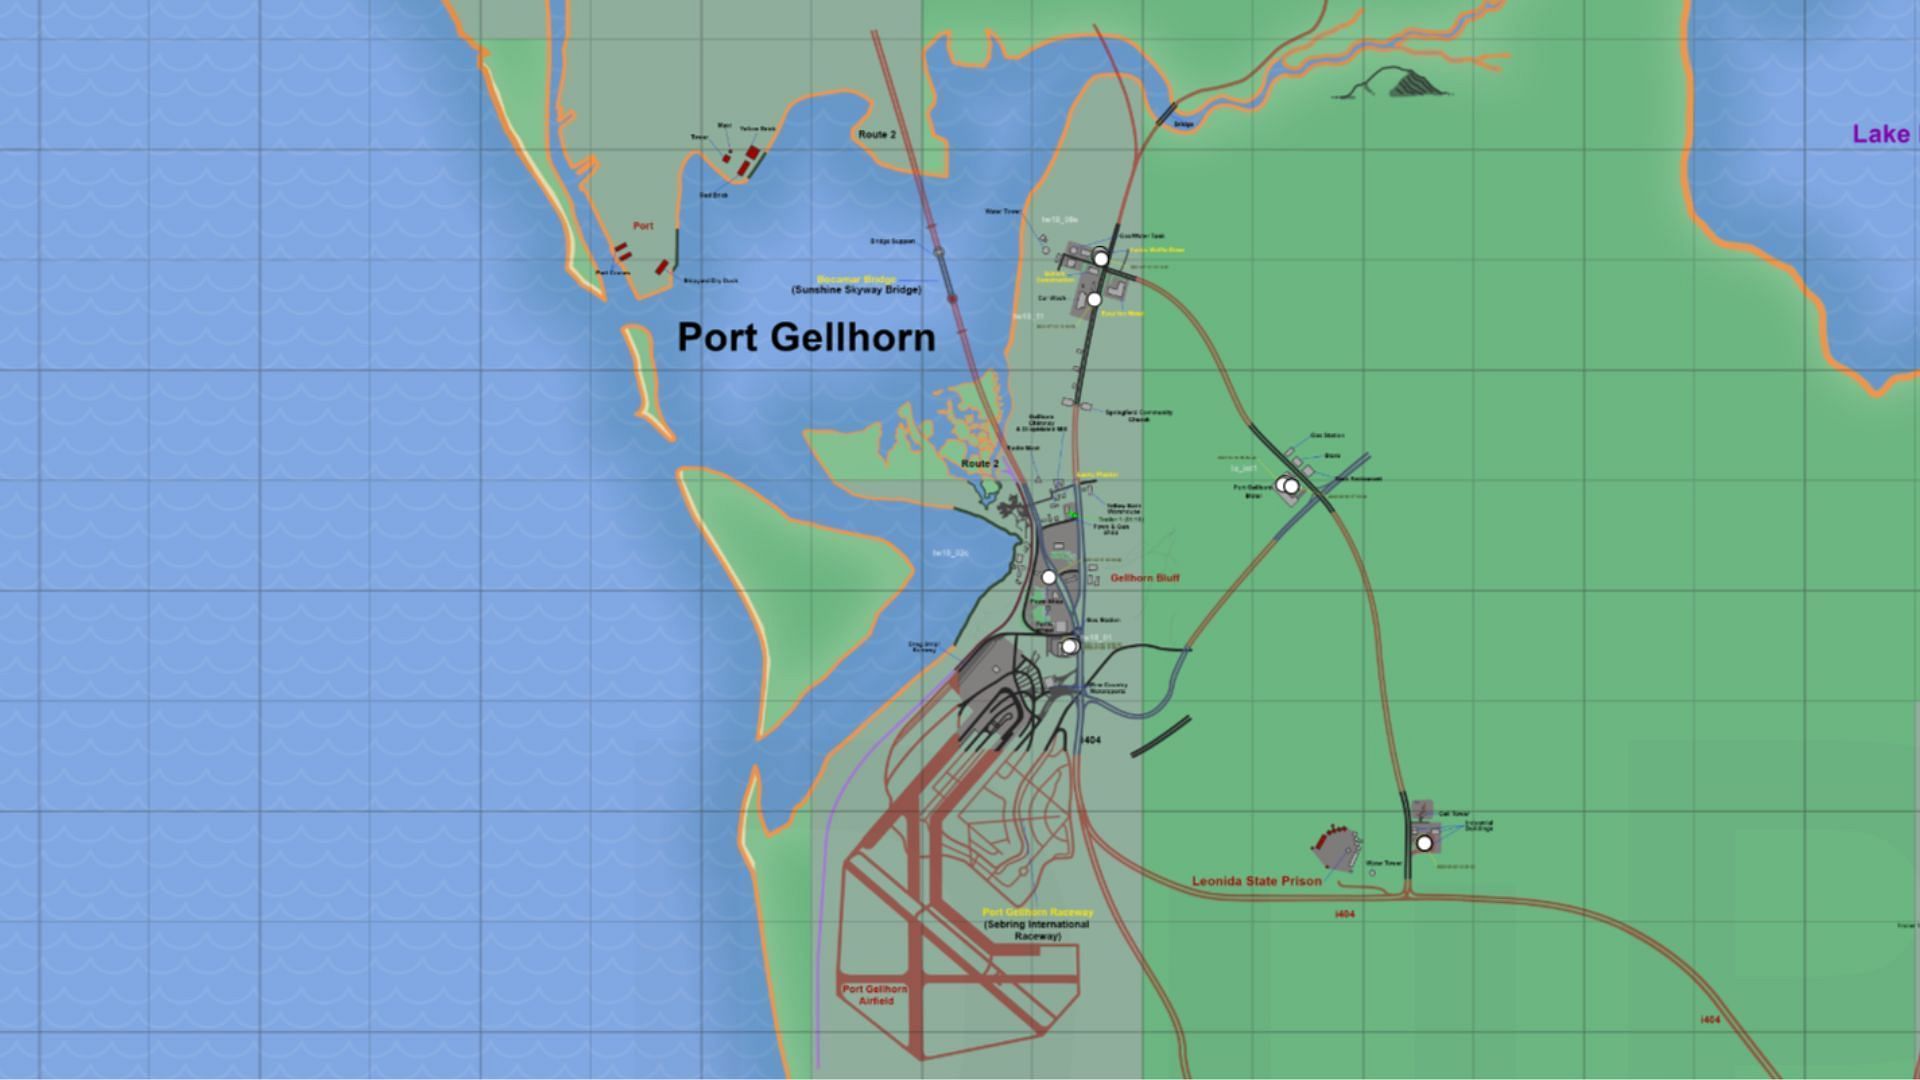 Port Gellhorn looks quite big as well (Image via VIMAP)